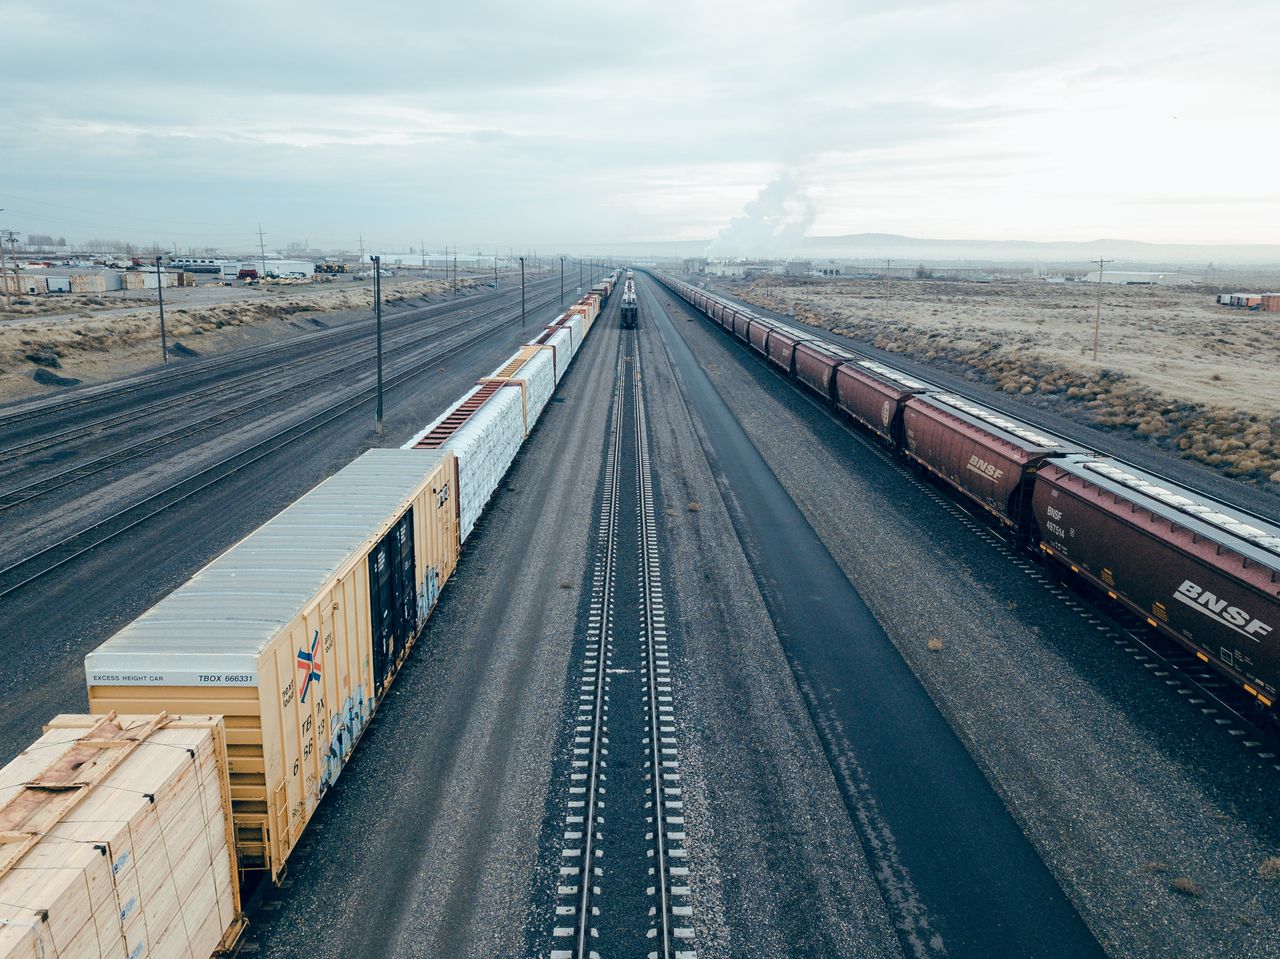 Freight train/ Cargo truck